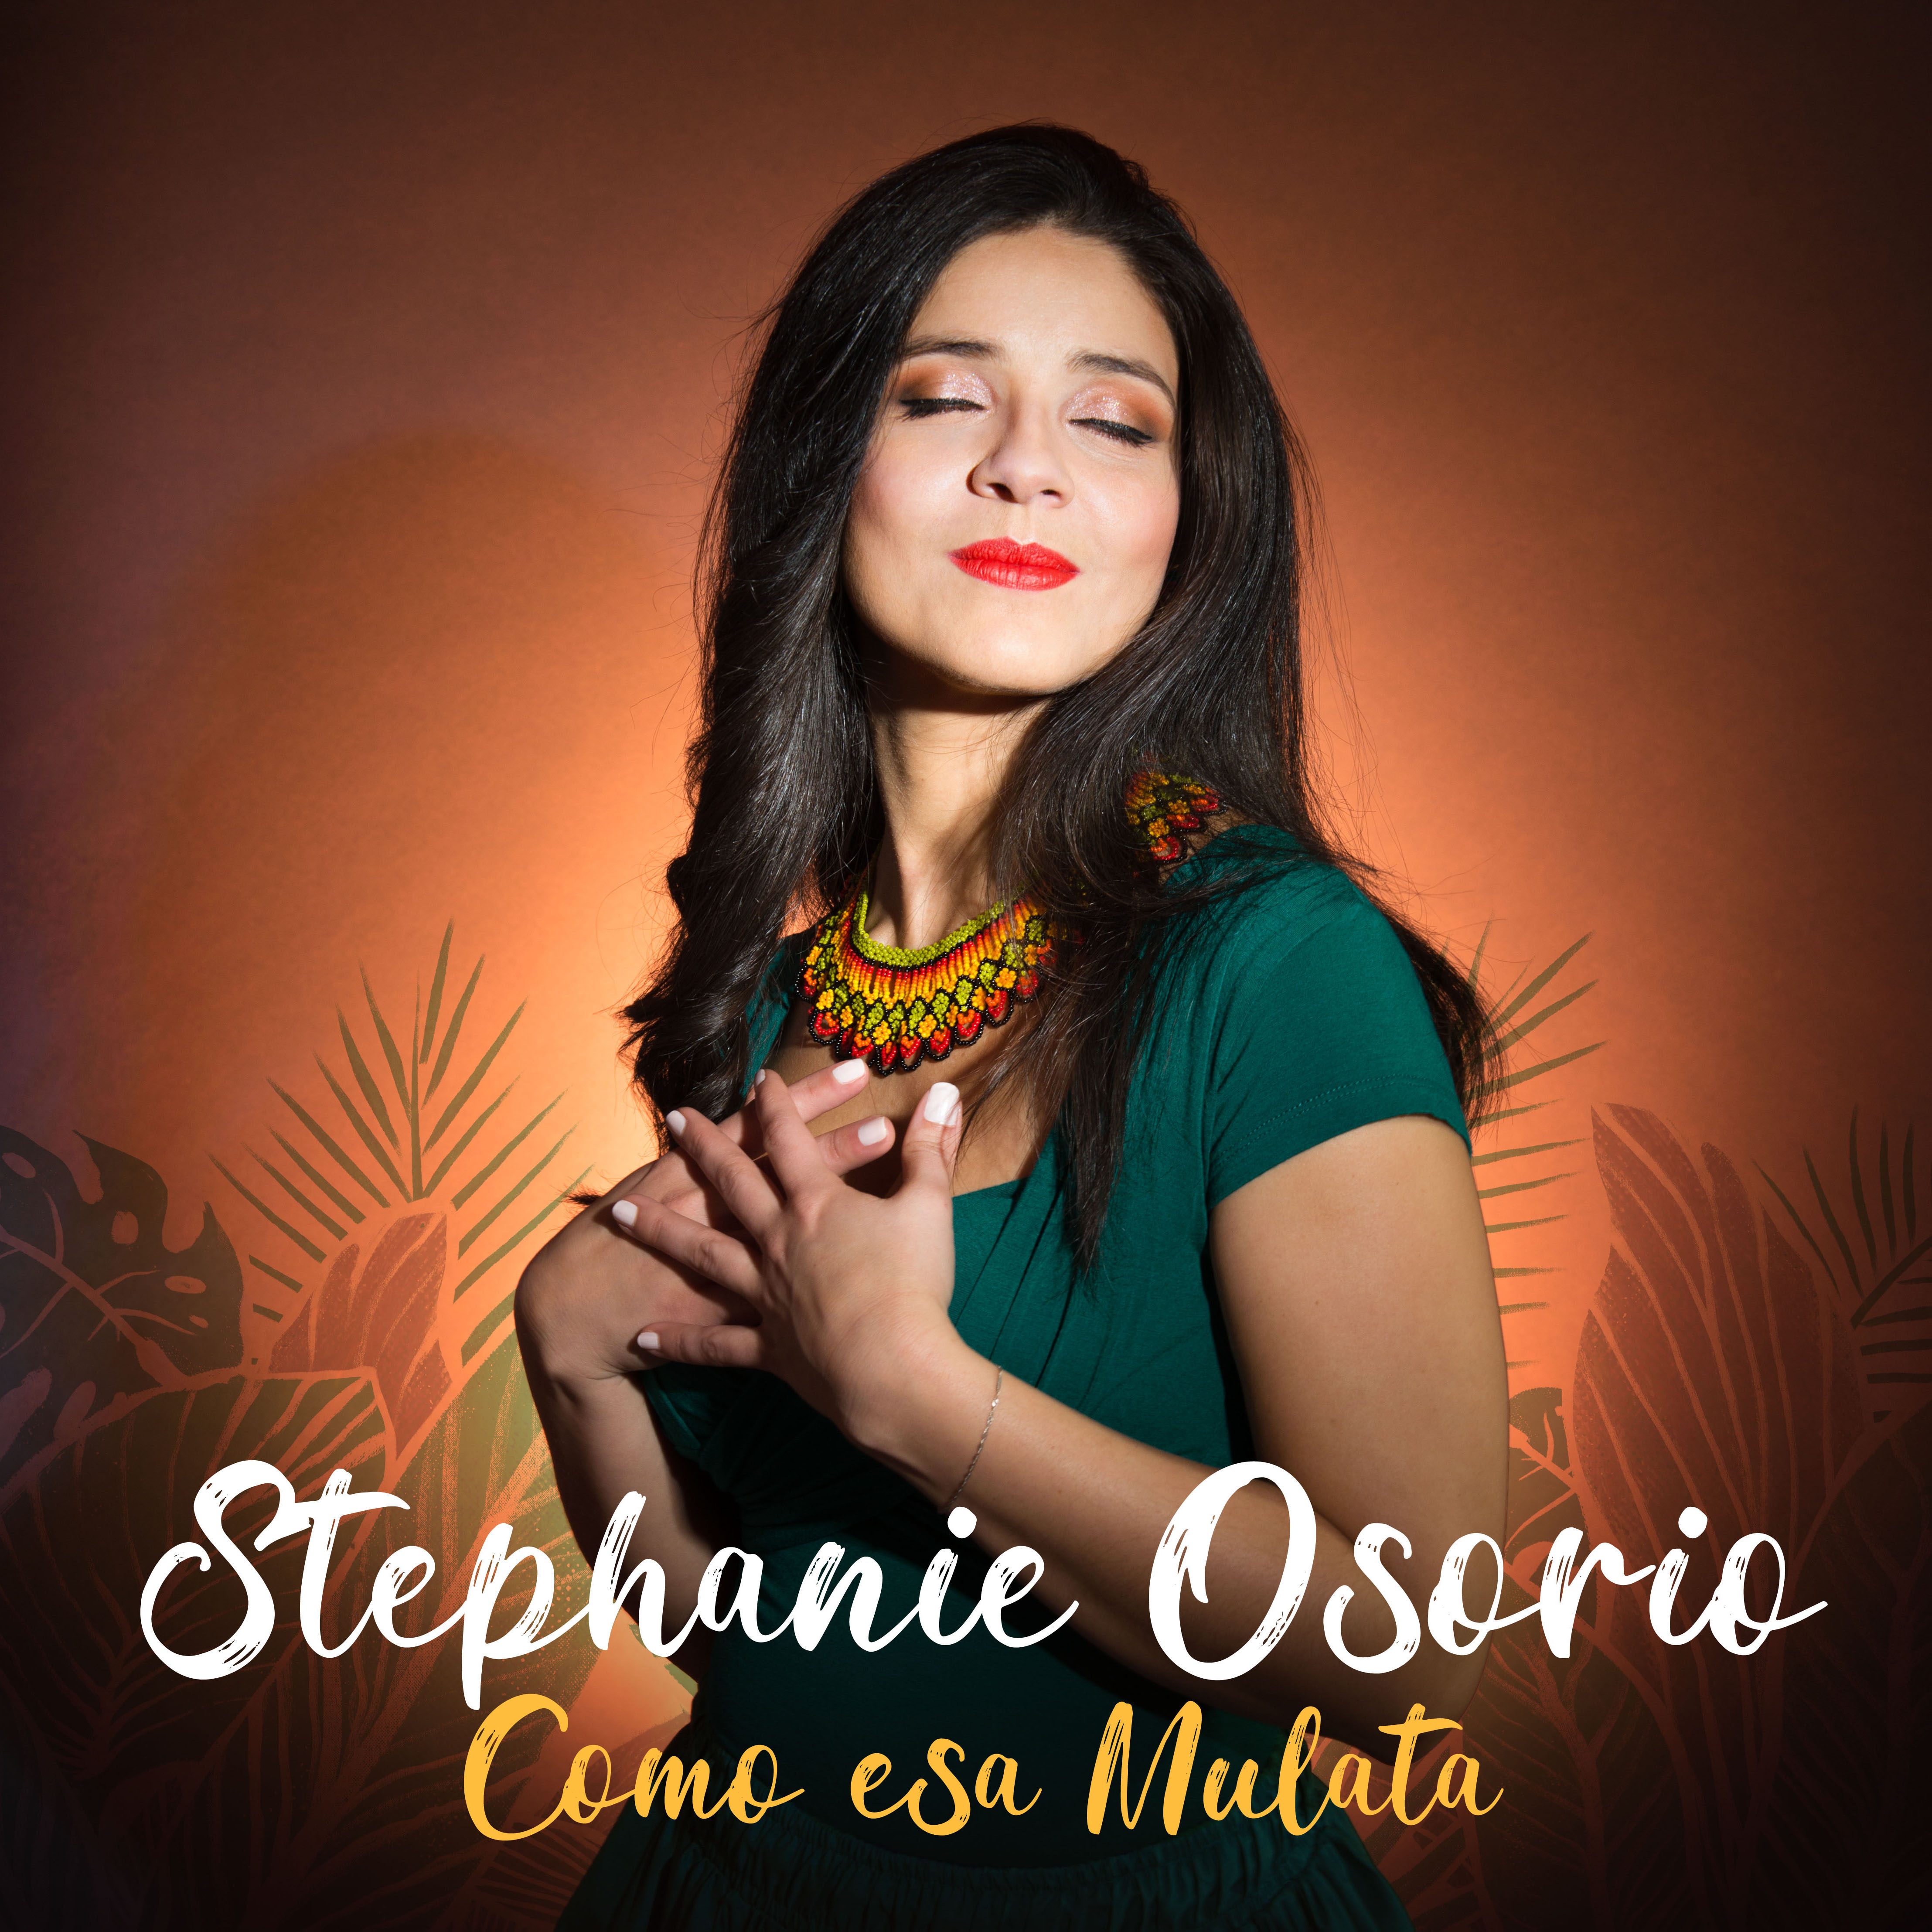 Stephanie Osorio / @tefysinger - Como esa Mulata (single). Crédit photo & illustration Adriana Garcia Cruz / Antonio Javier Caparo